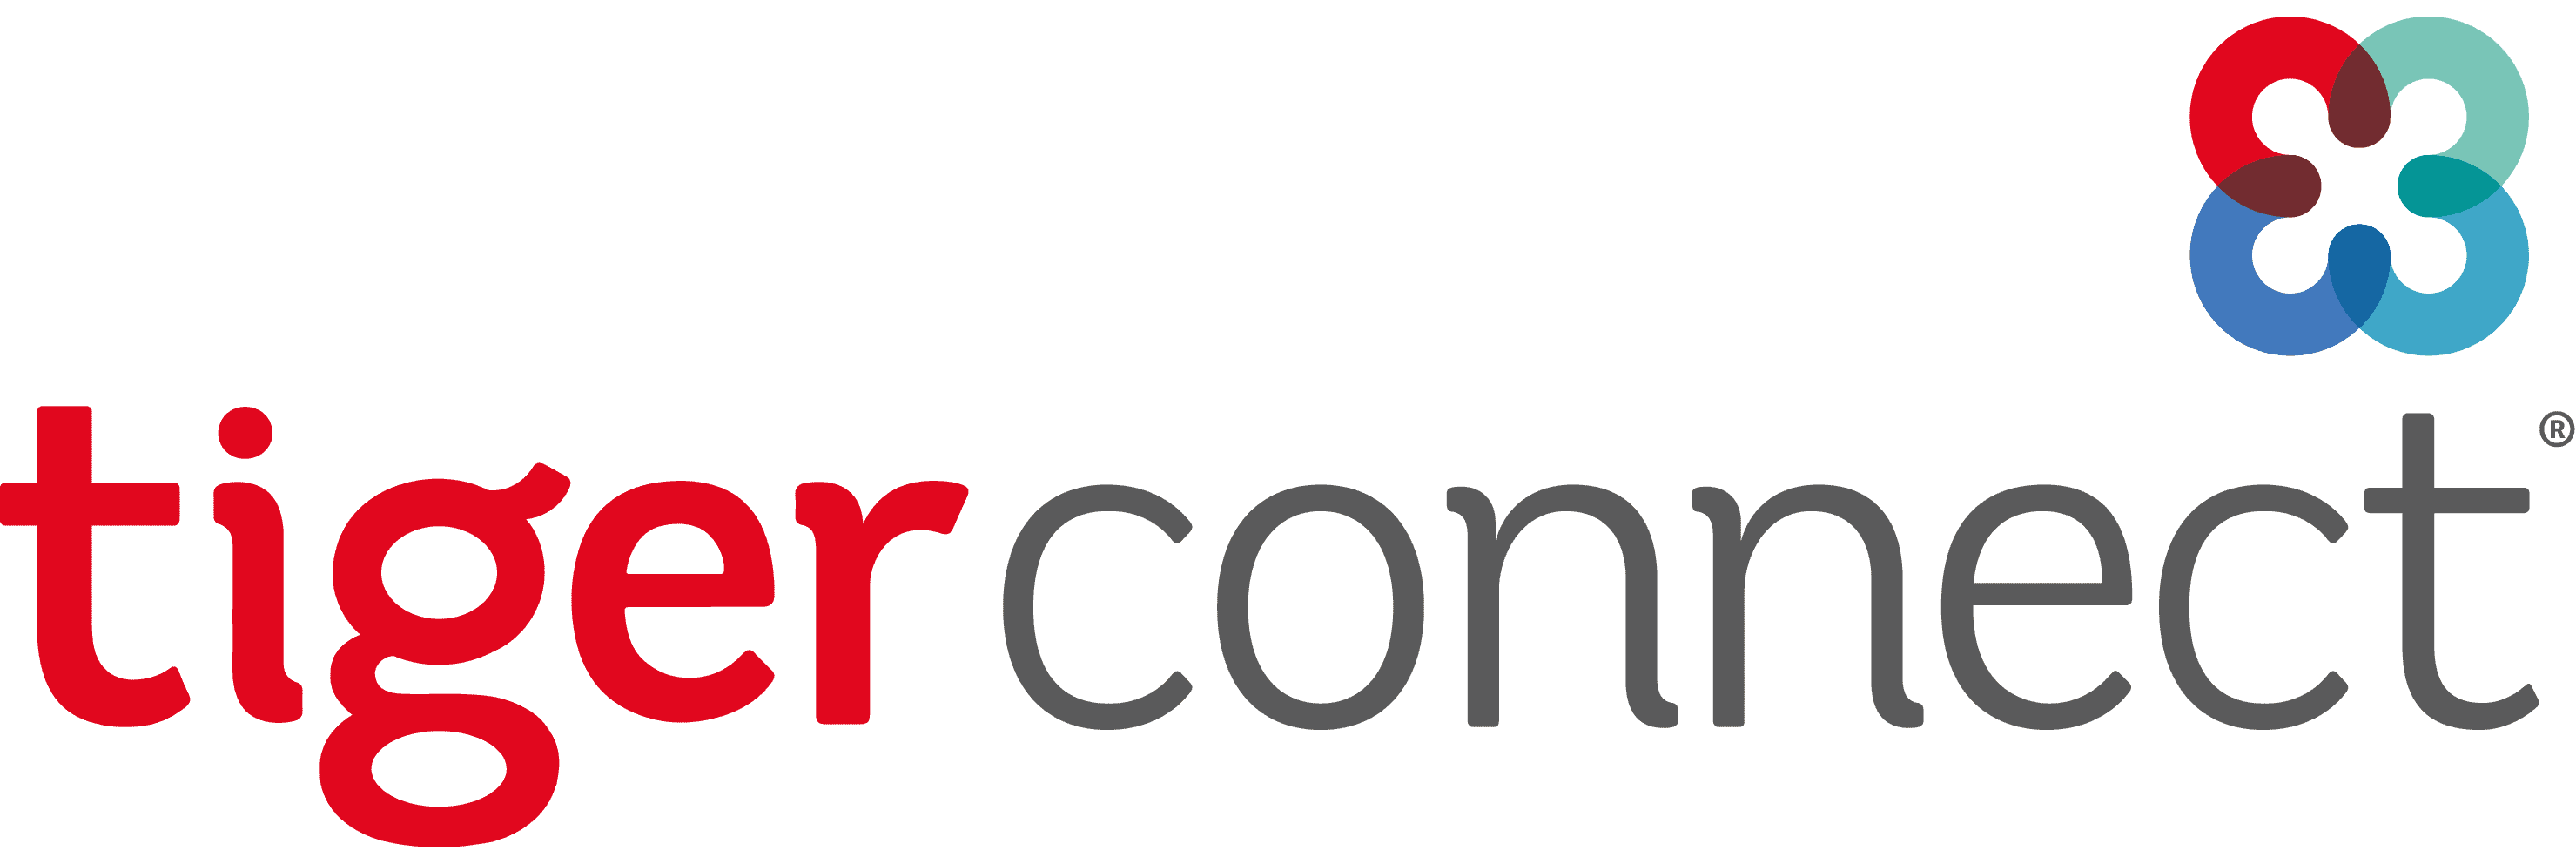 TigerConnect-tm-logo-CMYK-01